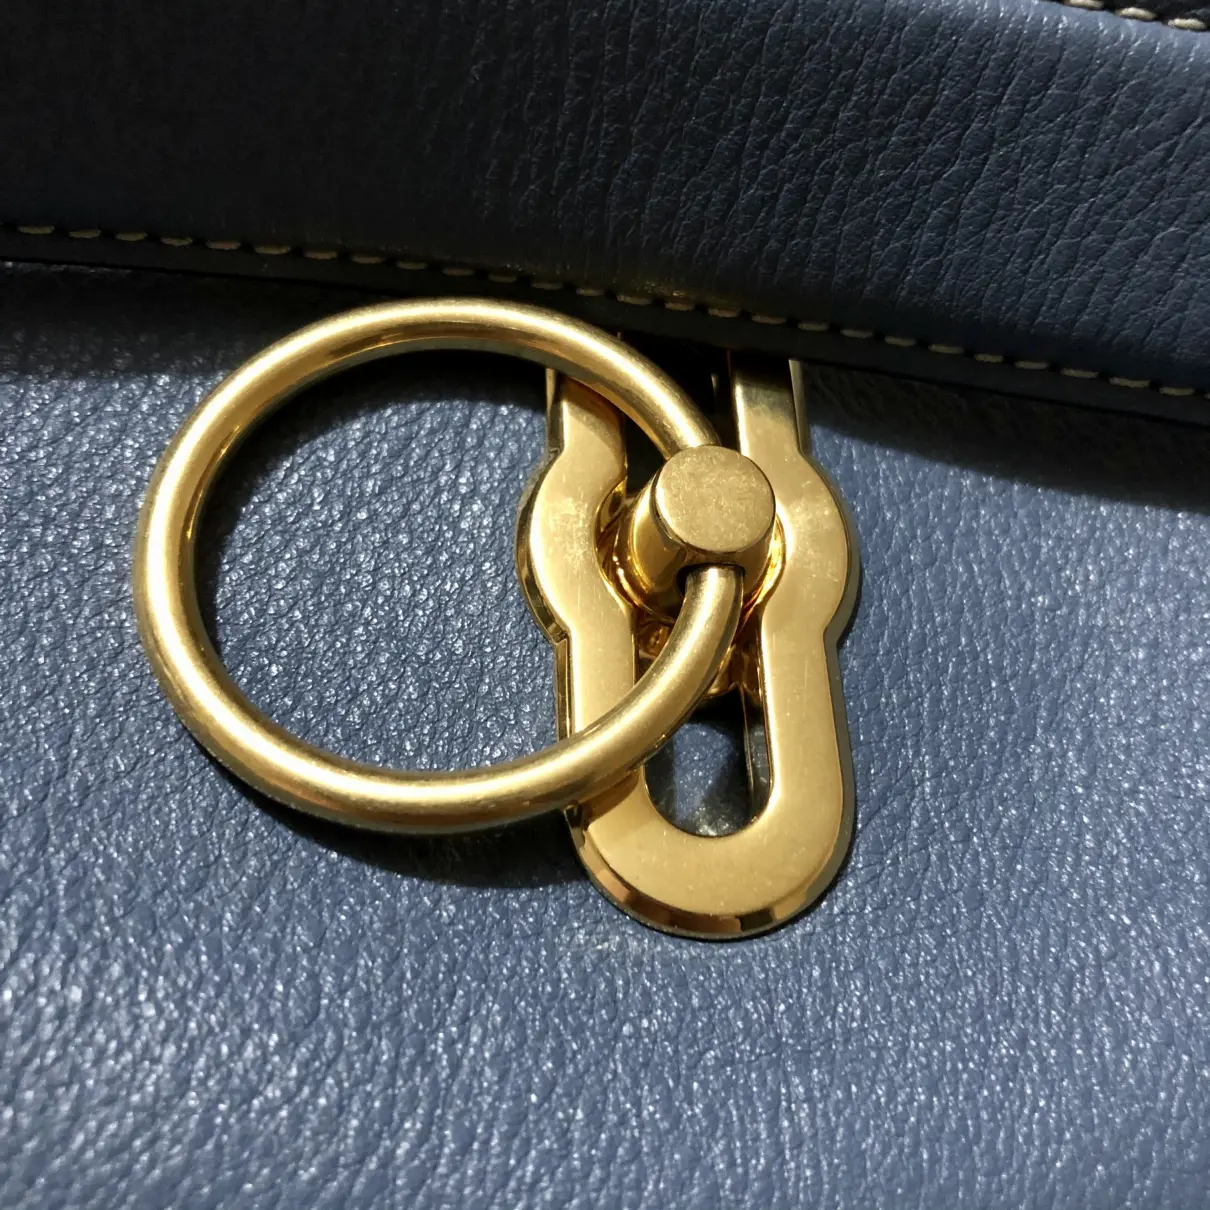 Leighton leather handbag Mulberry